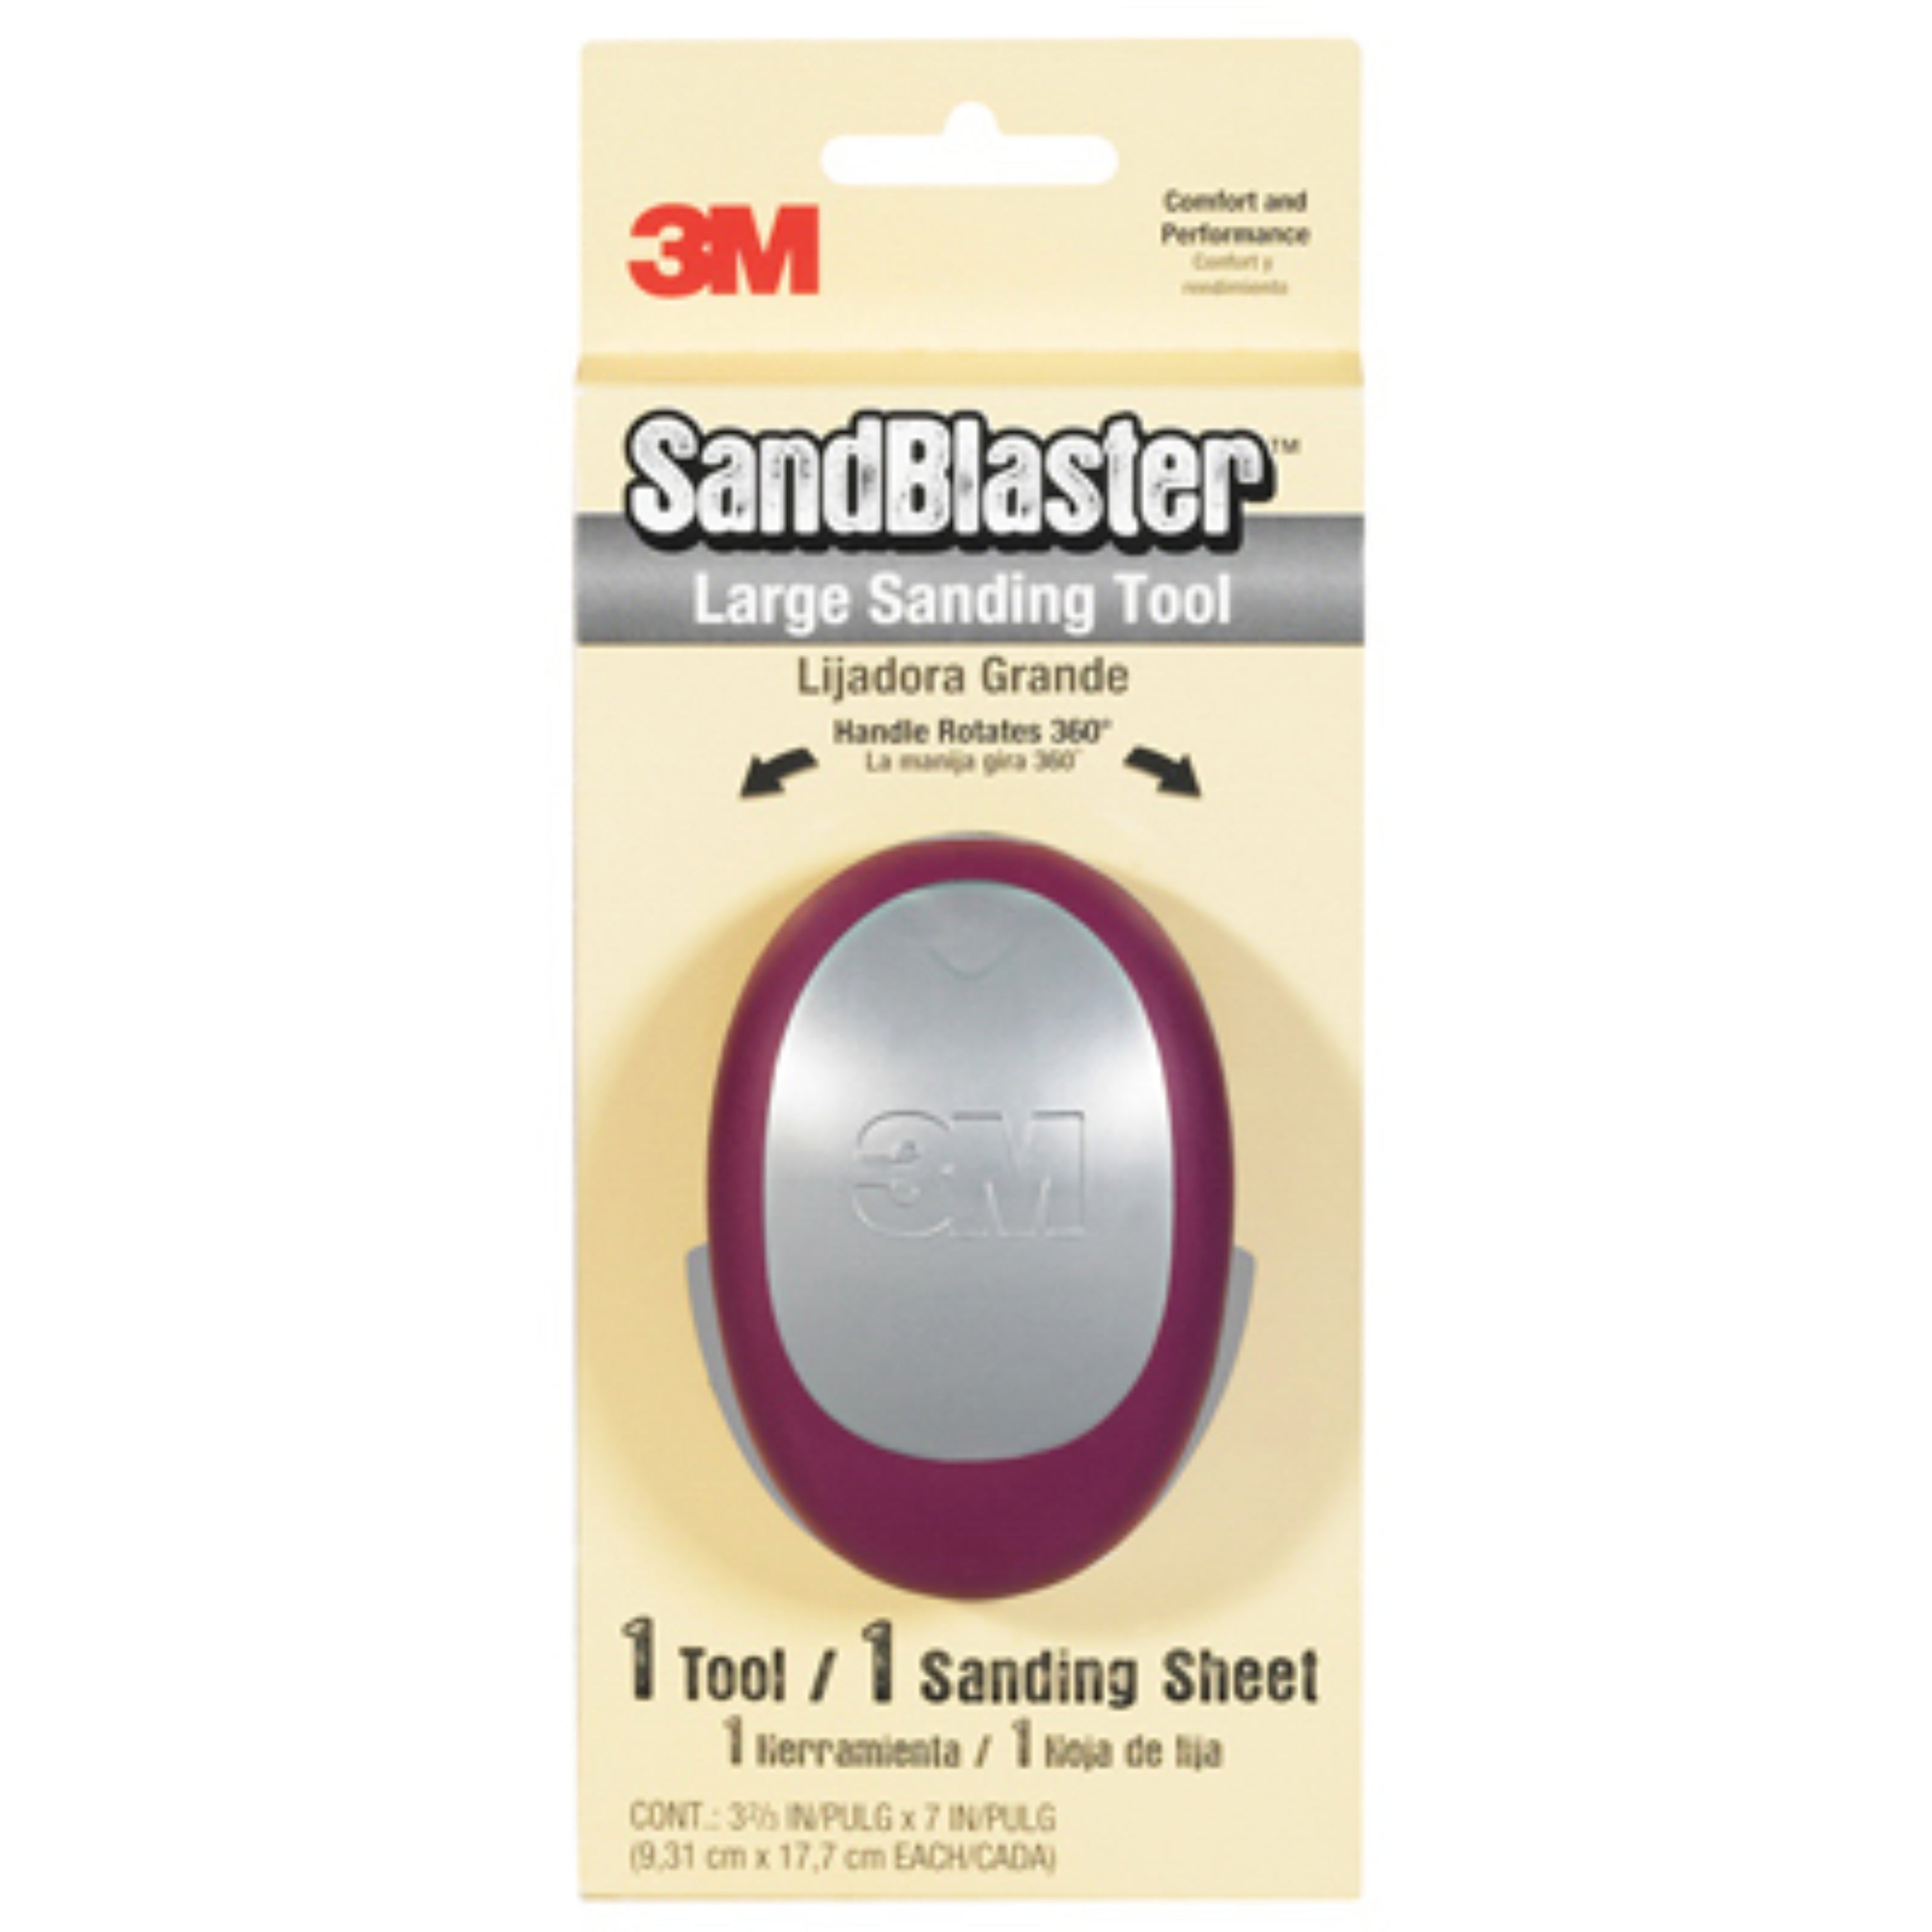 Sandblaster Flexible Large Sanding Tool